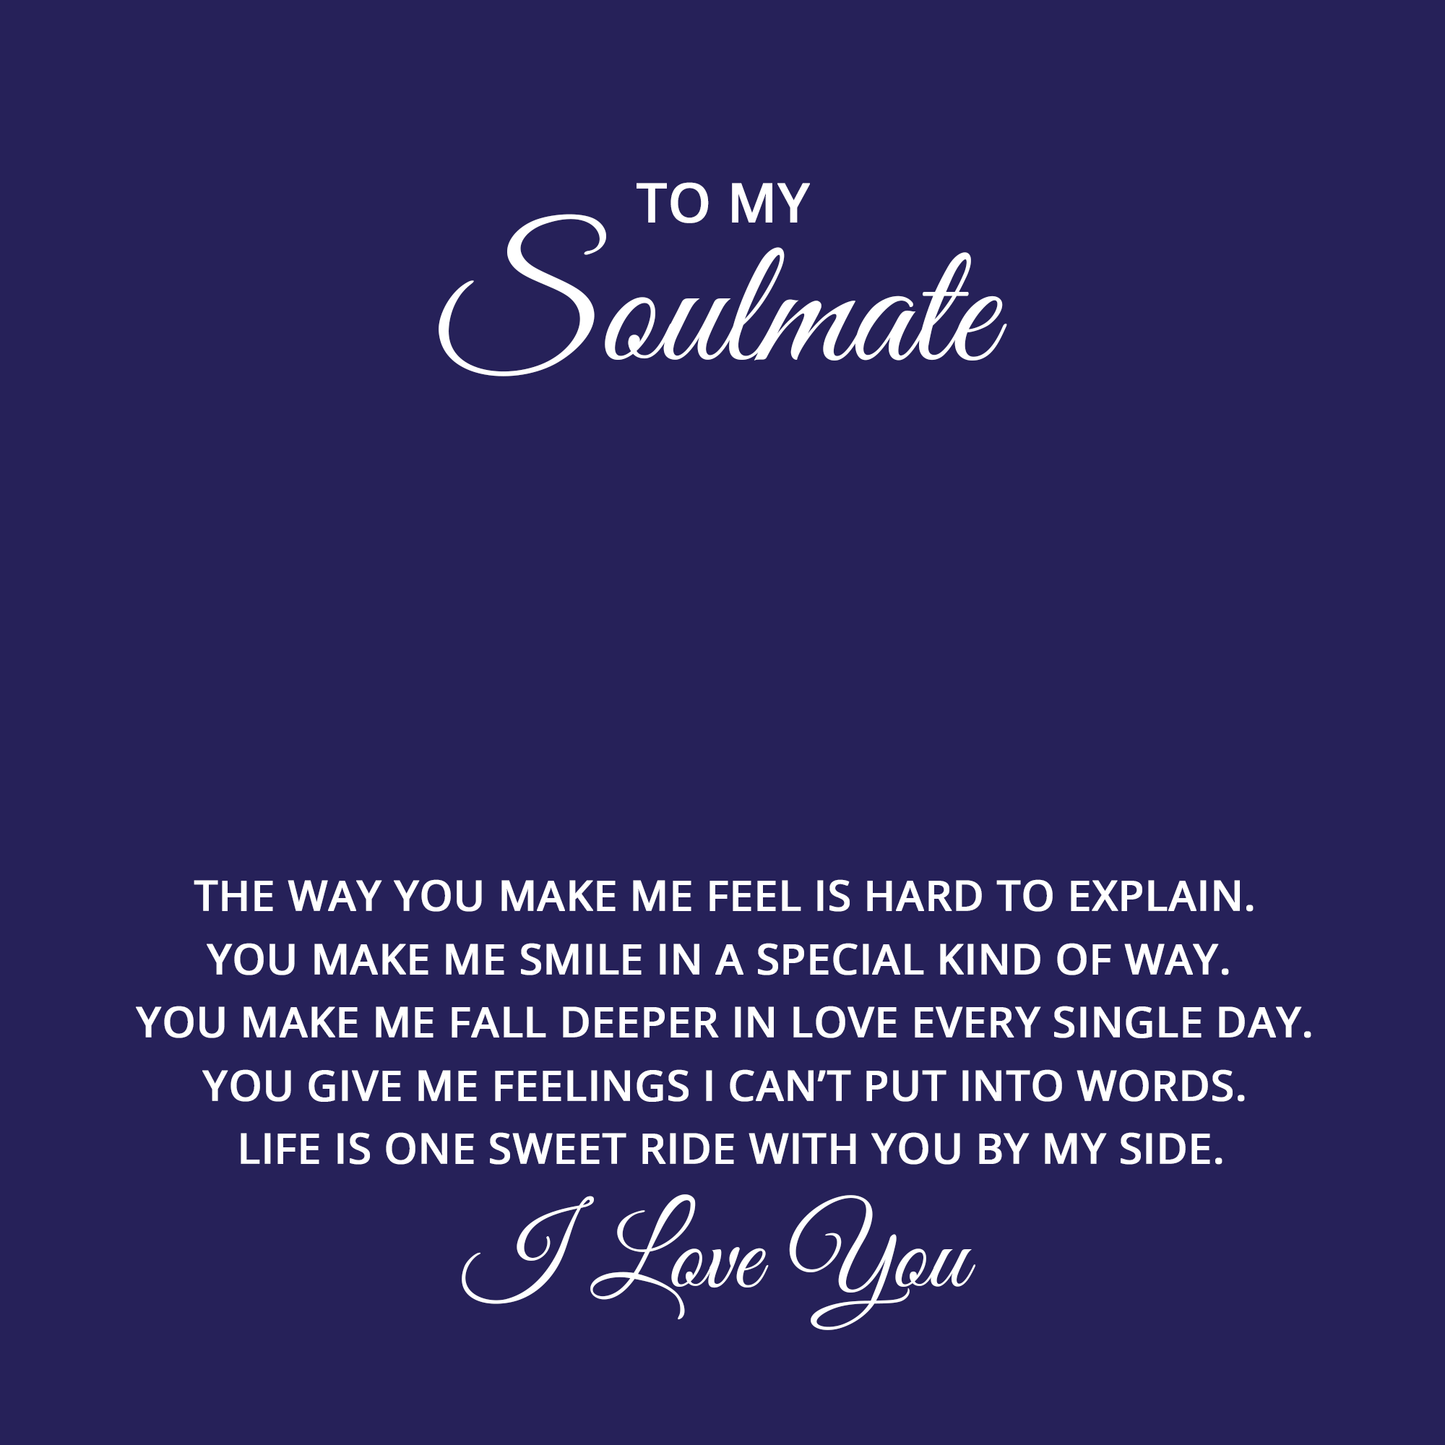 To My Soulmate - Men's "Love You Forever" Bracelet